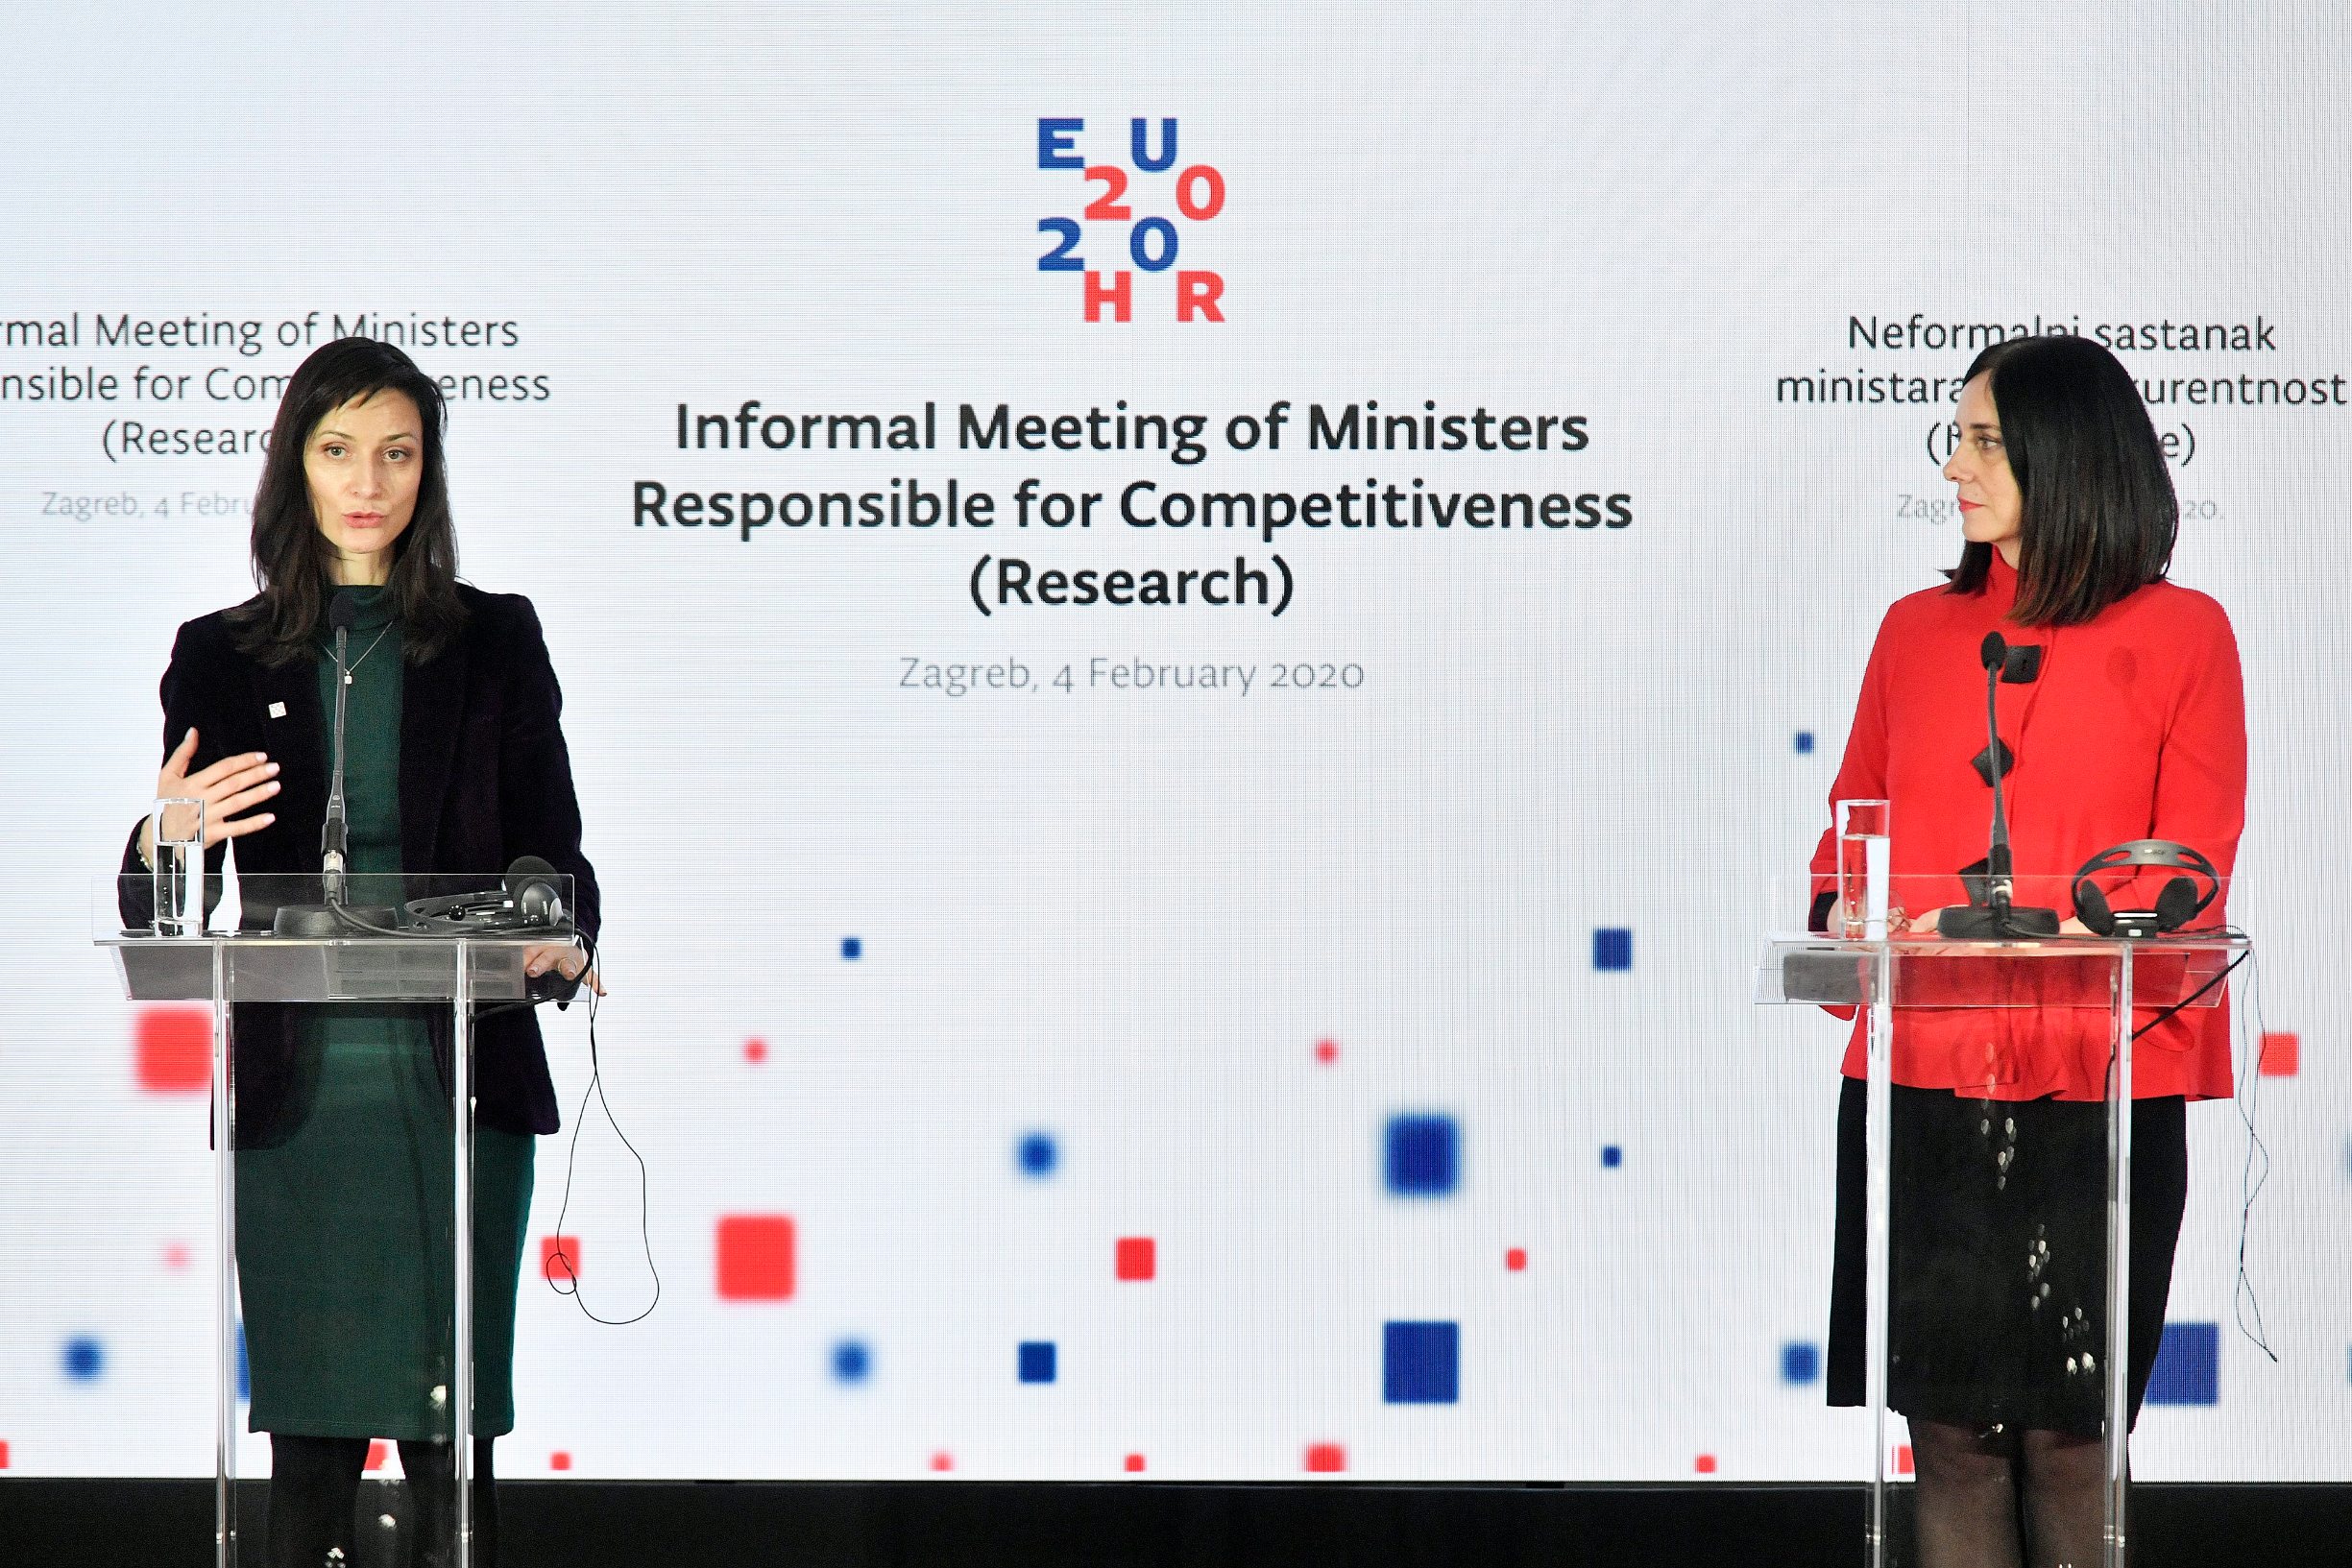 Croatian minister of science Blaženka Divjak and EU commissioner Mariya Gabriel